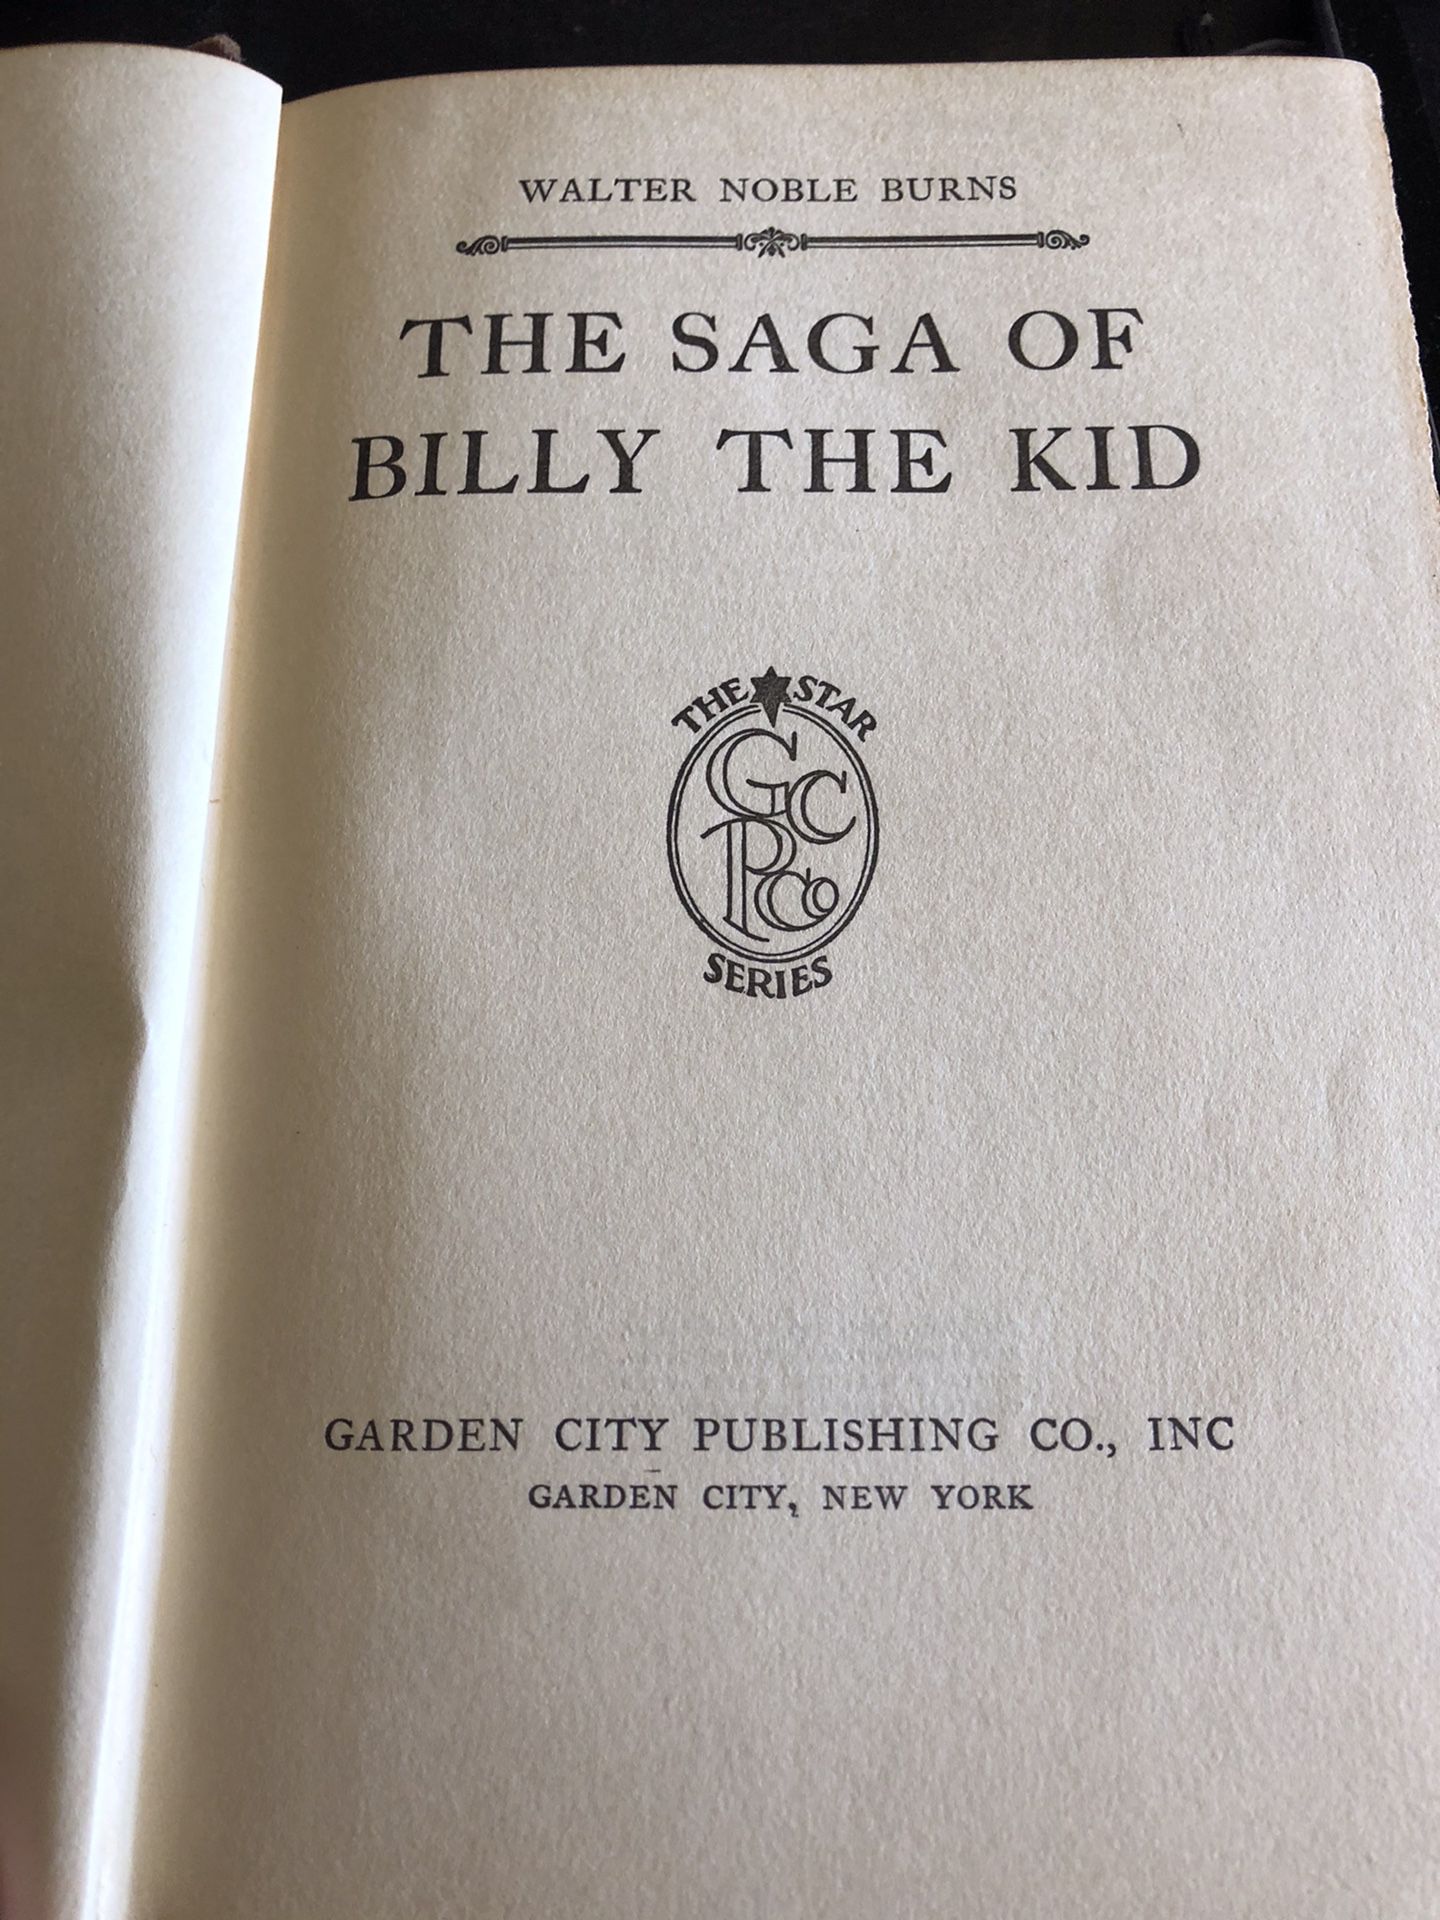 The Saga of Billy the Kid.